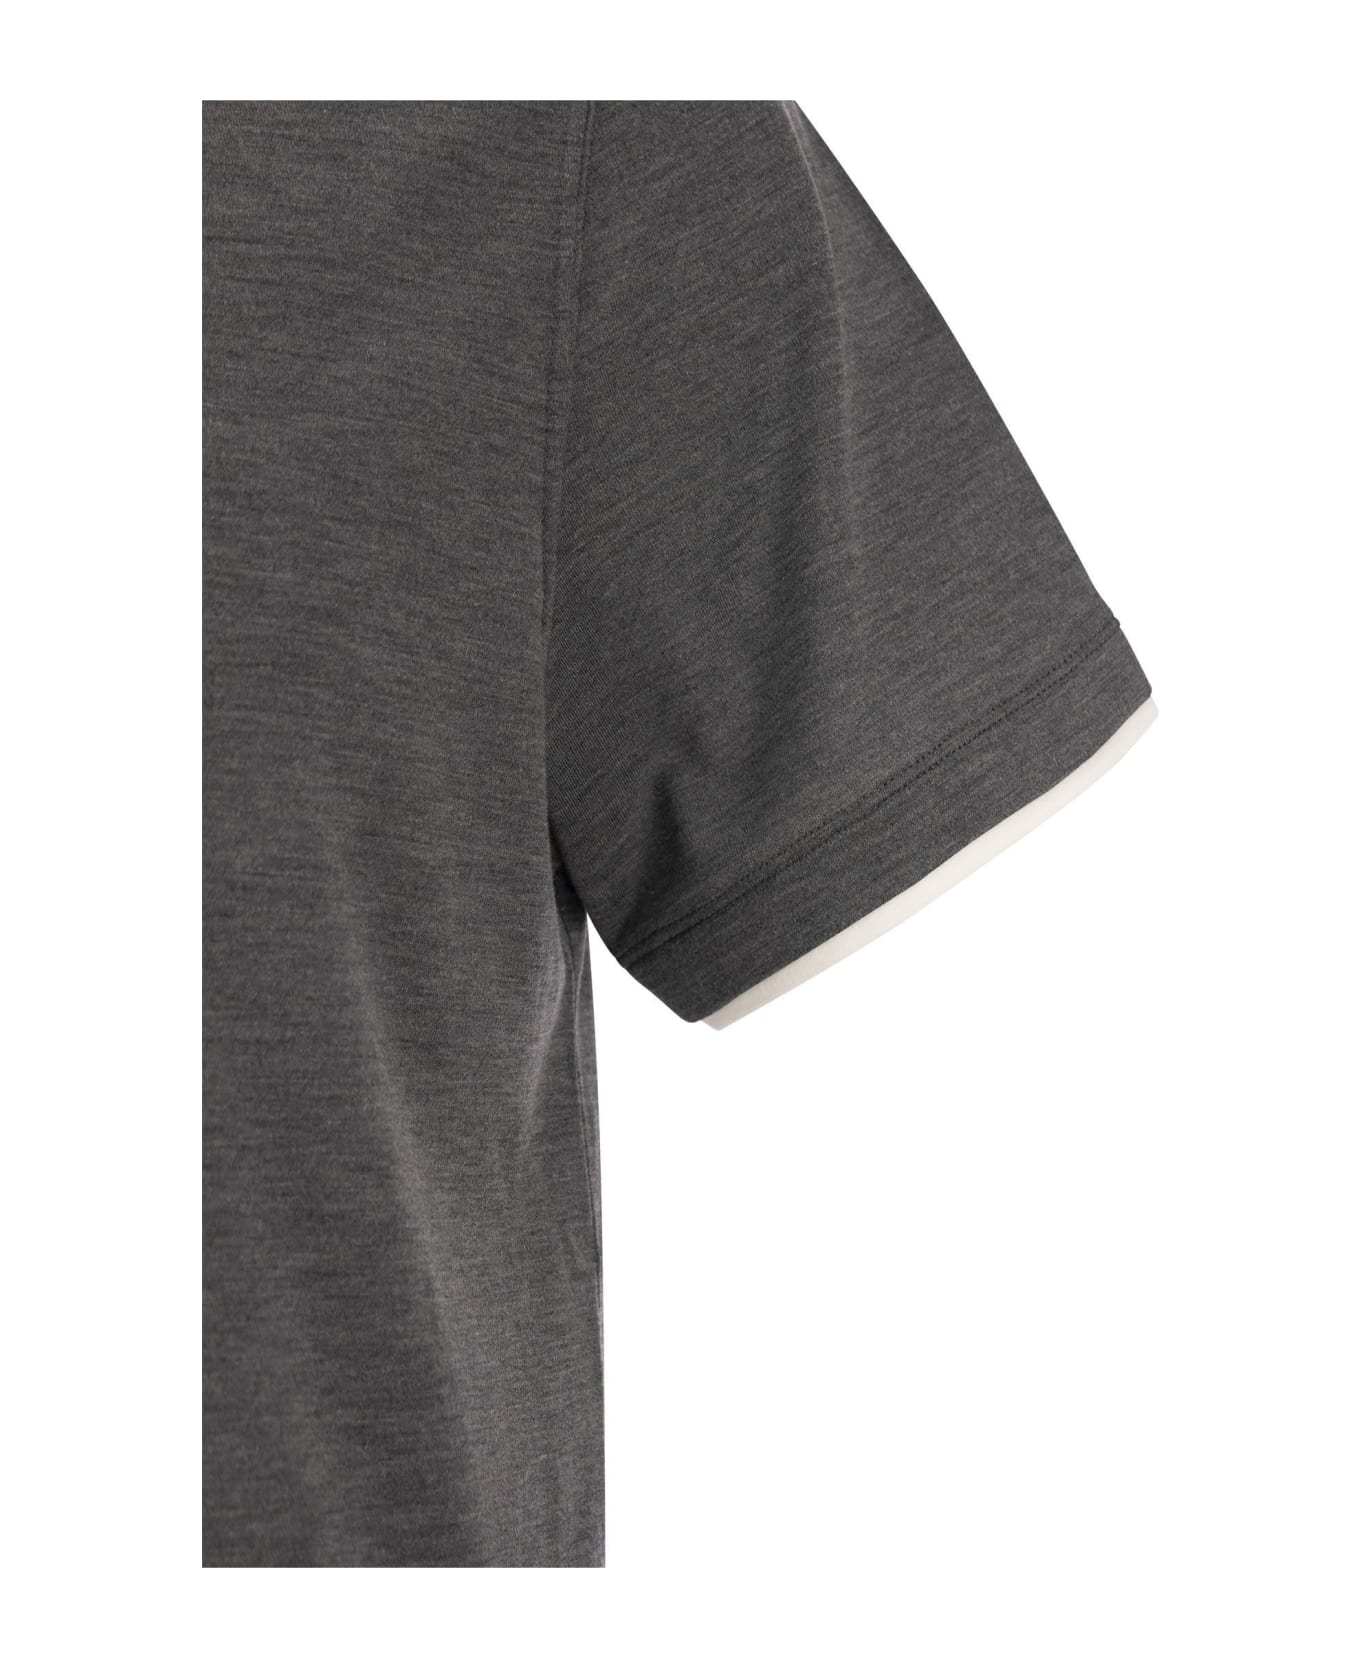 Brunello Cucinelli Silk And Cotton T-shirt - Grey シャツ